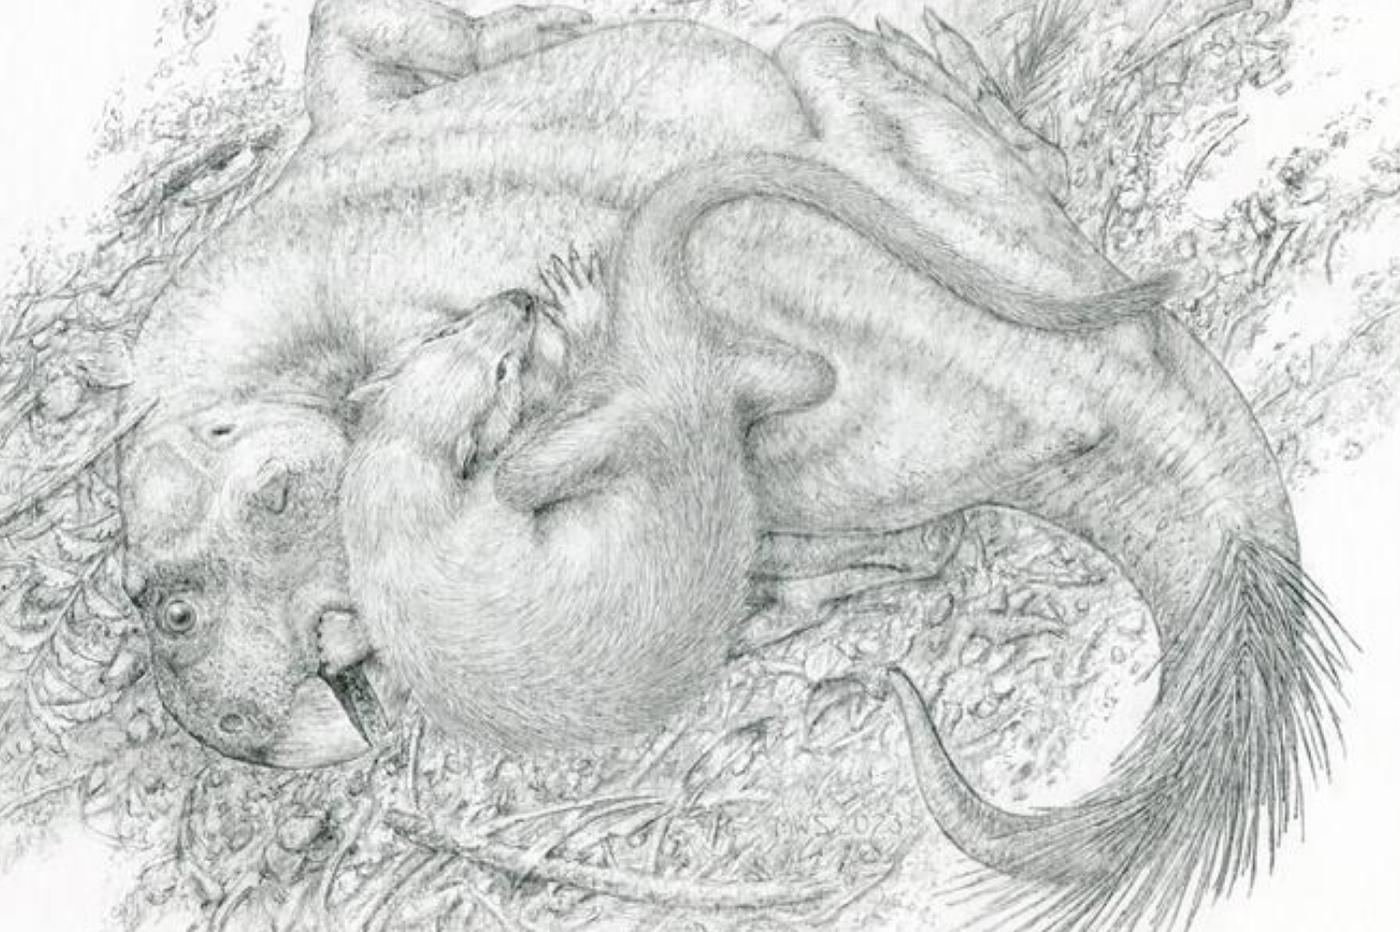 Une vue d'artiste de l'attaque d'un Psittacosaurus